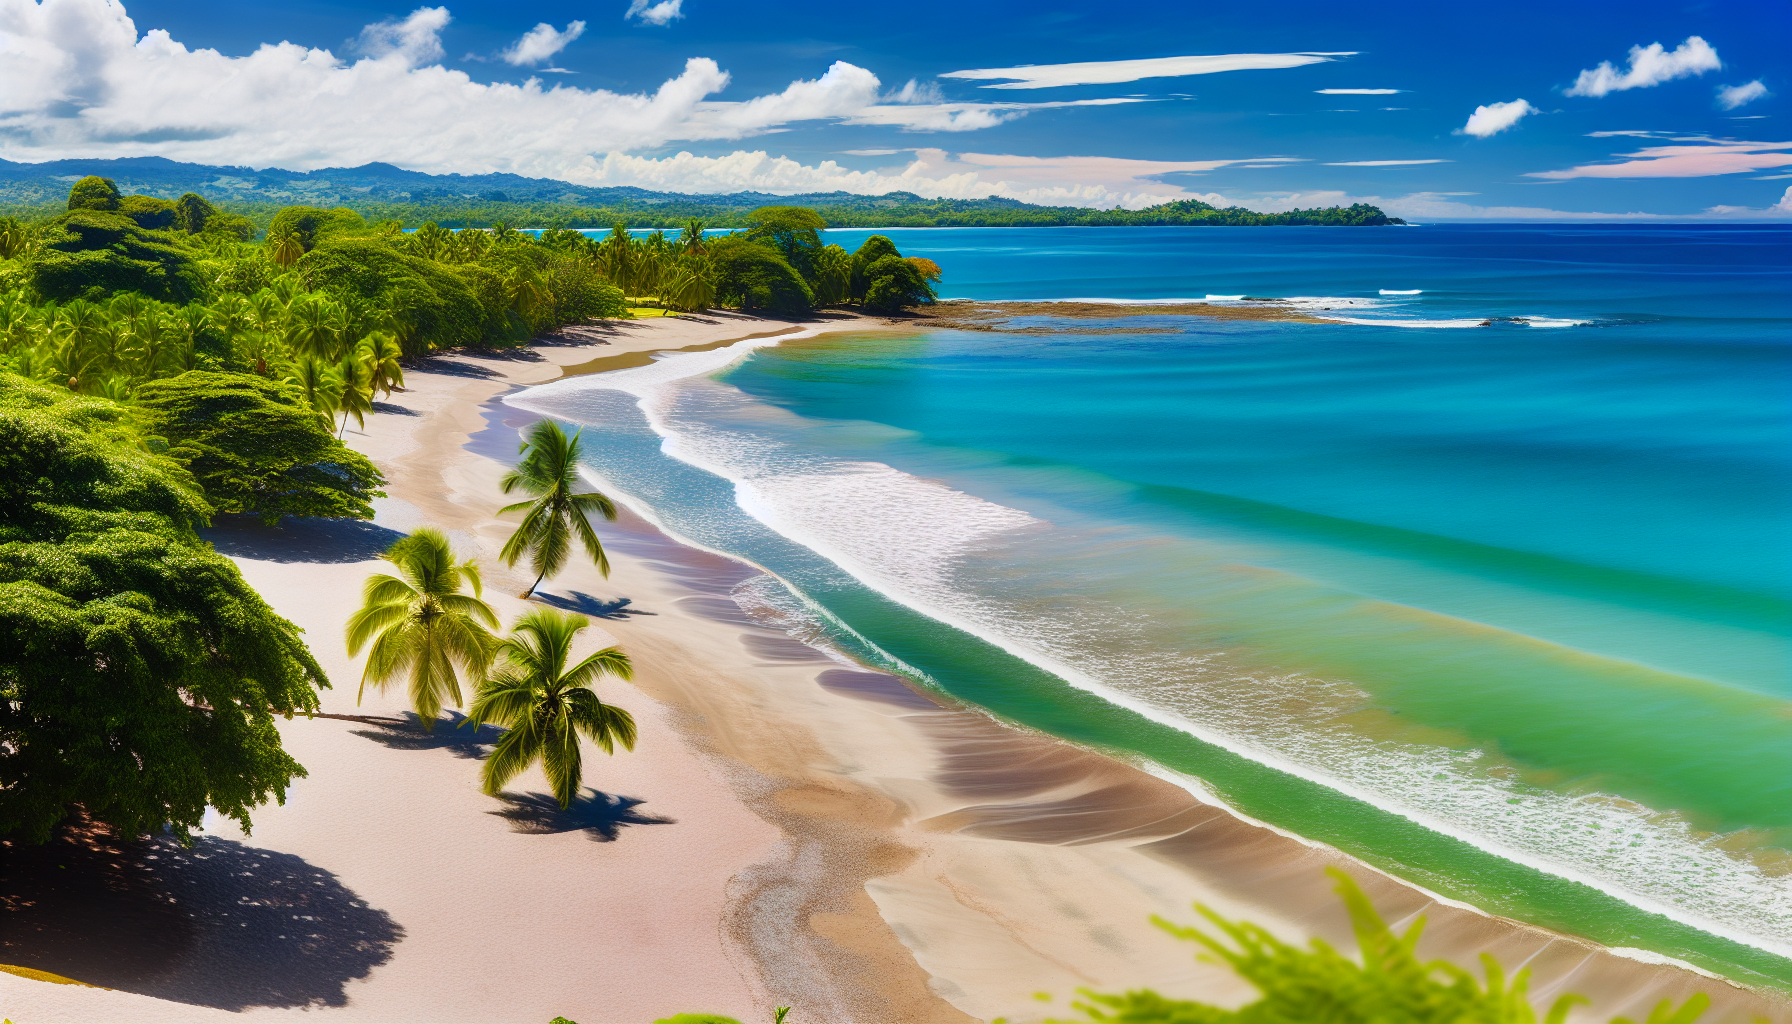 Scenic view of Costa Rica's Caribbean coast